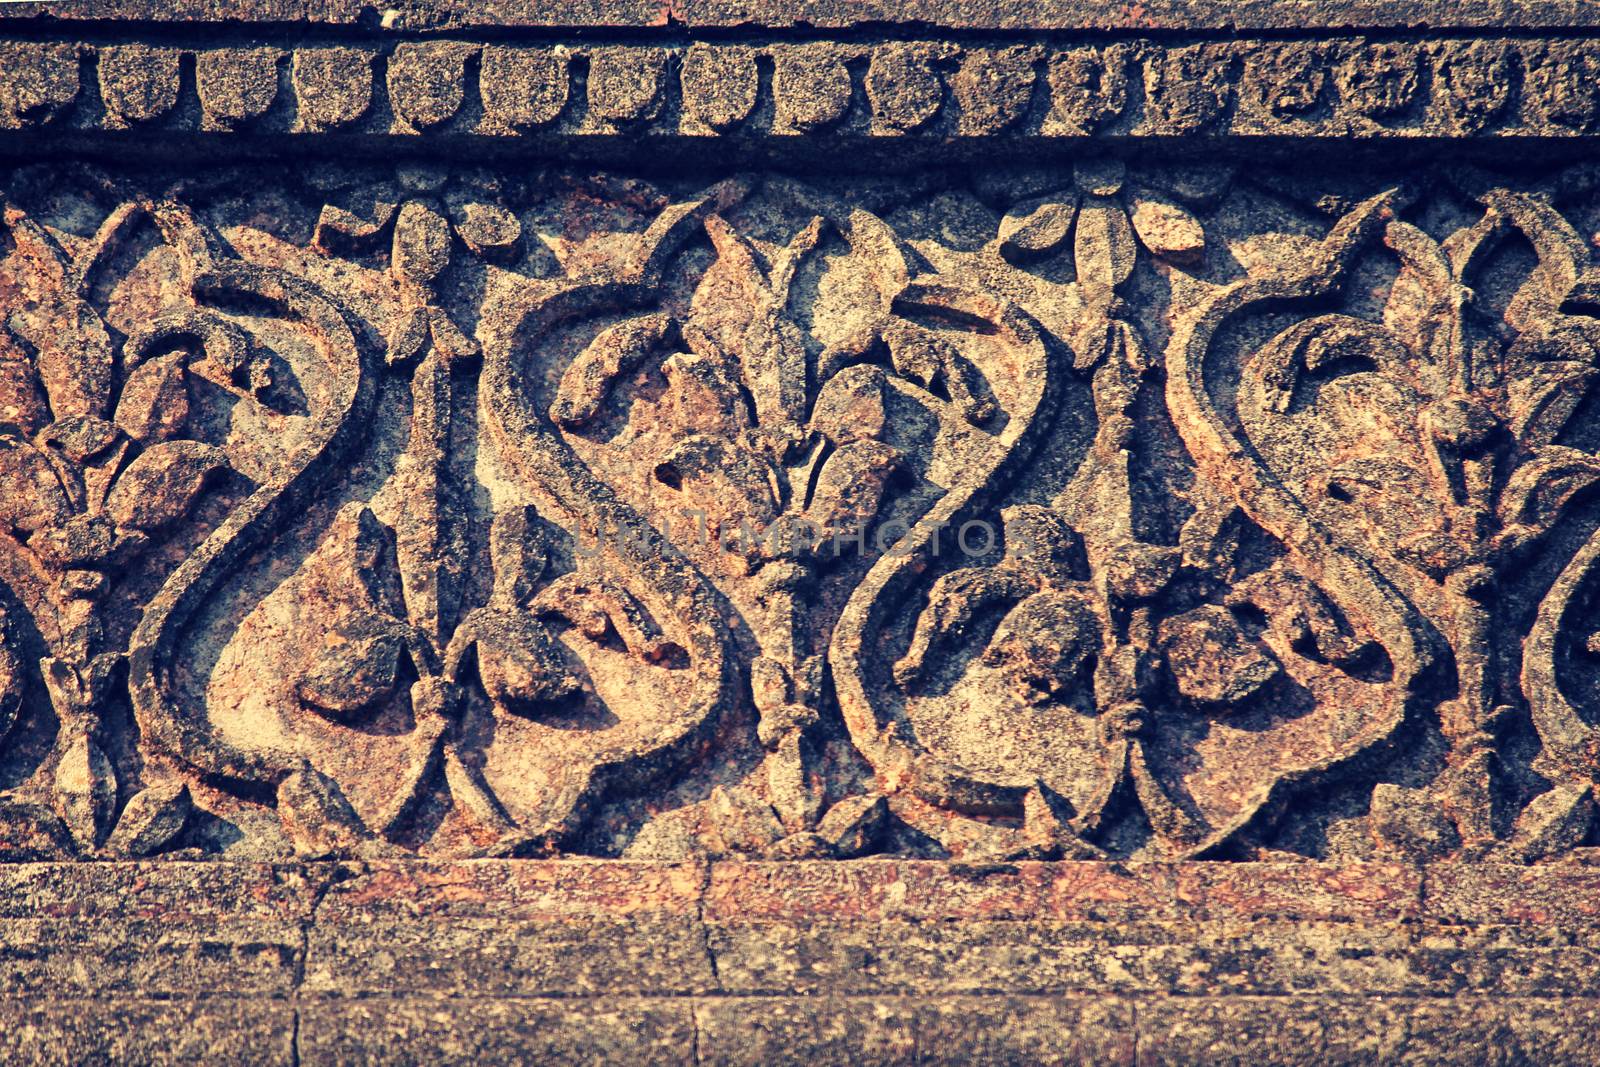 Floral Stone carving at Sangameshwar Temple near Saswad, Maharashtra, India